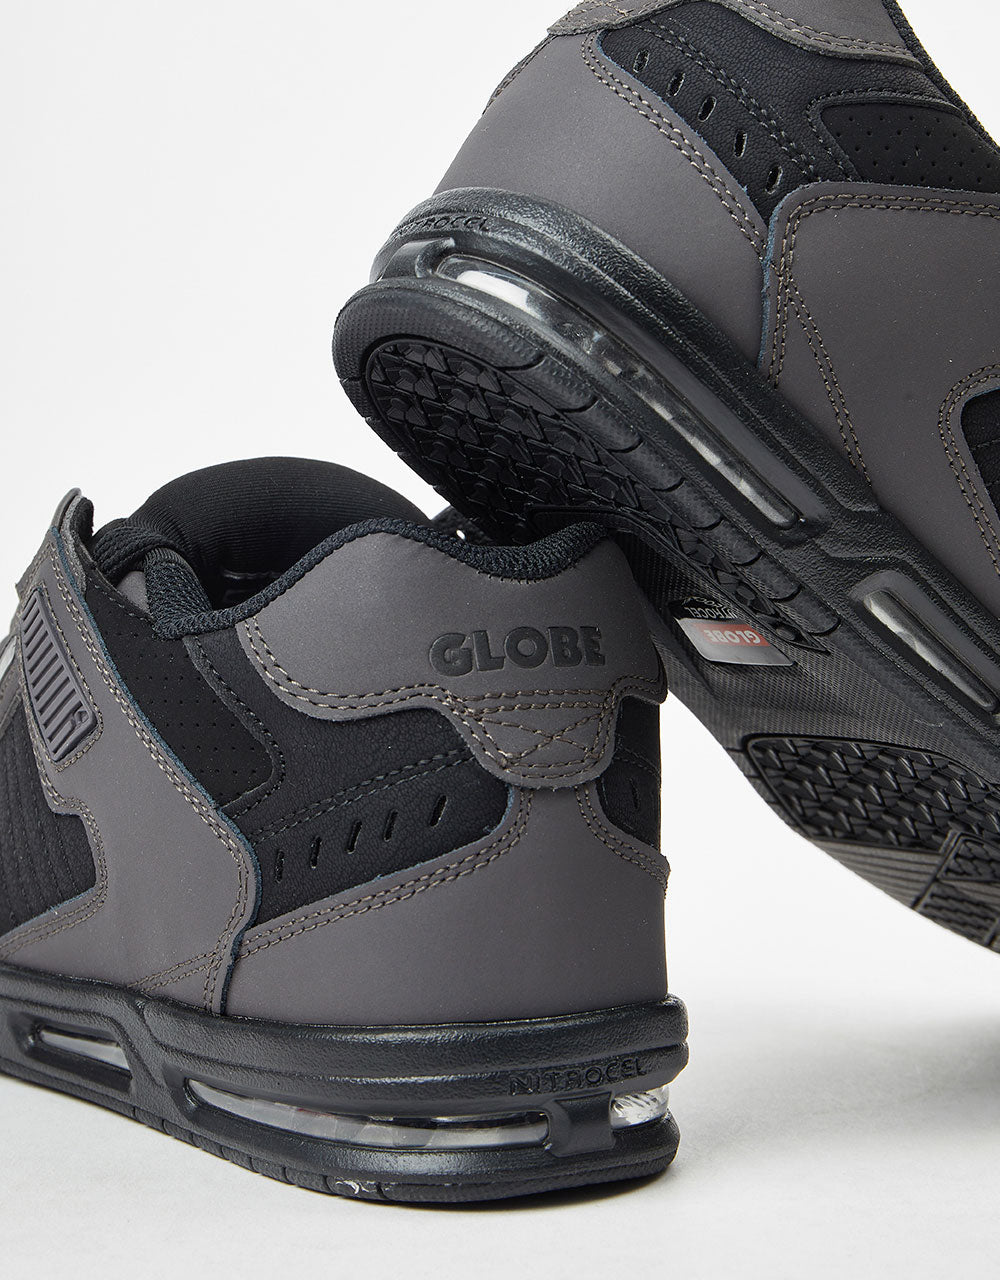 Globe Sabre Skate Shoes - Black/Gunmetal